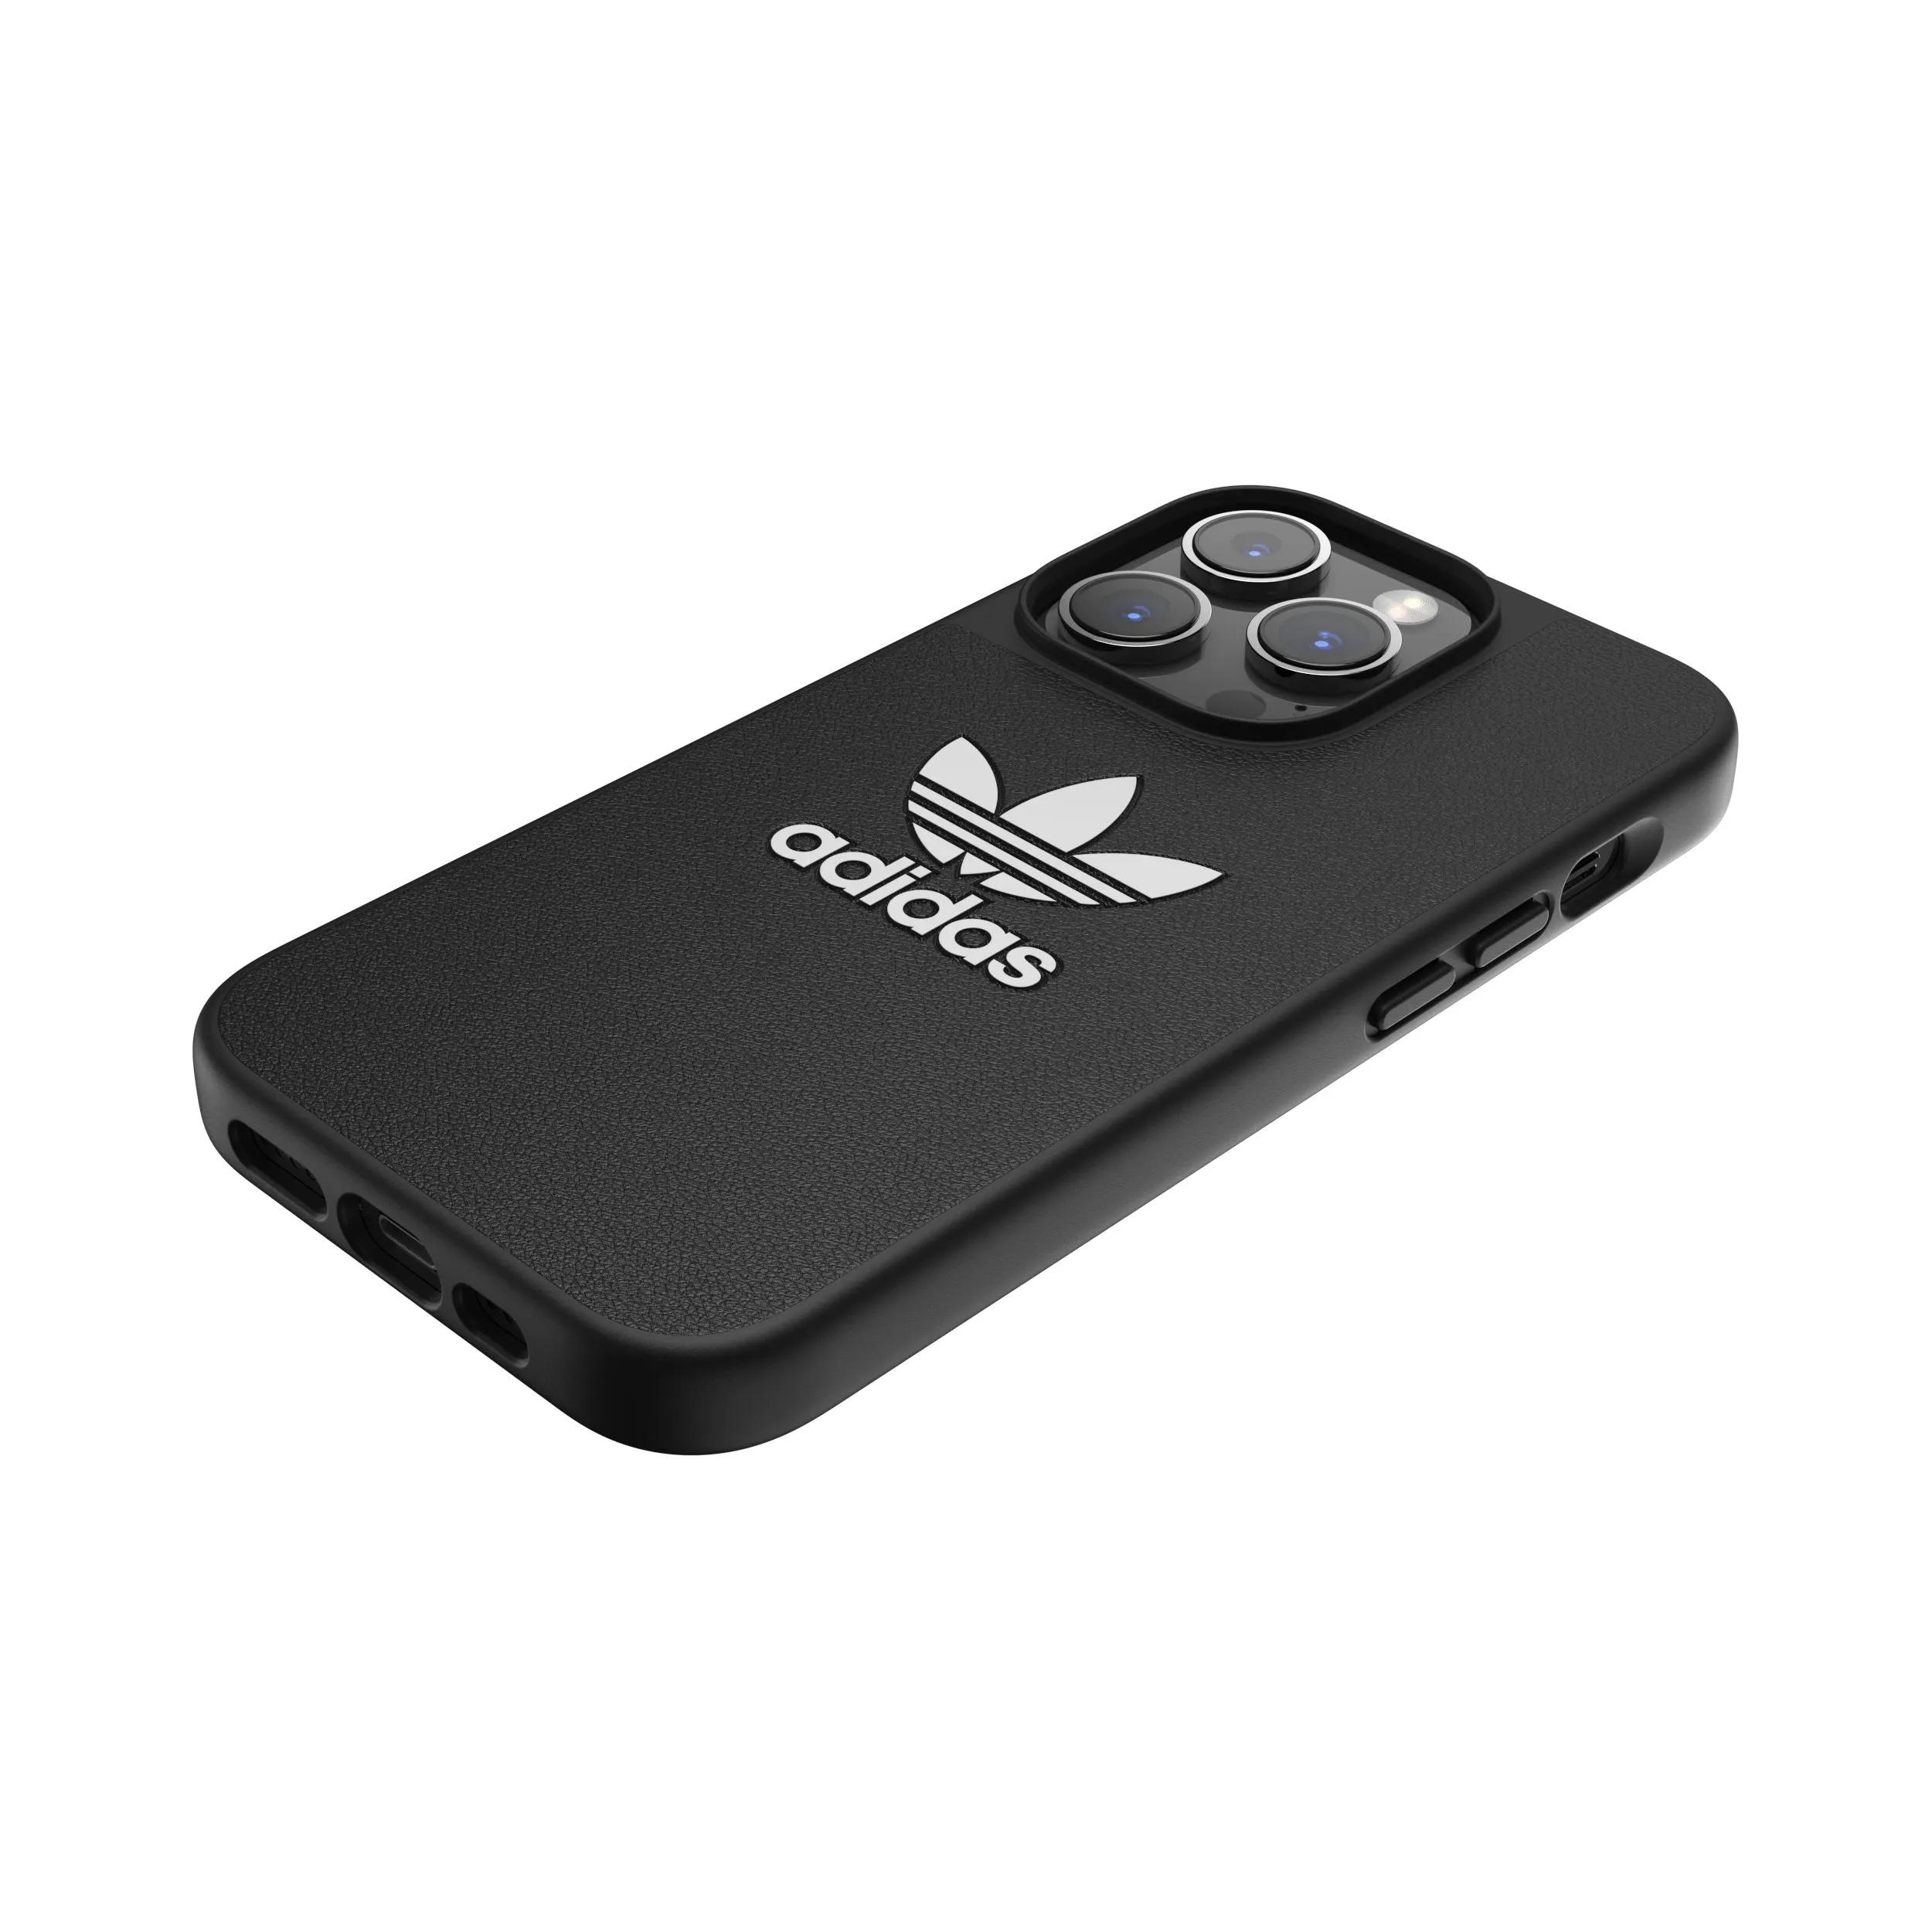 Adidas รุ่น Moulded Case Basic - เคส iPhone 14 Pro - สี Black/White